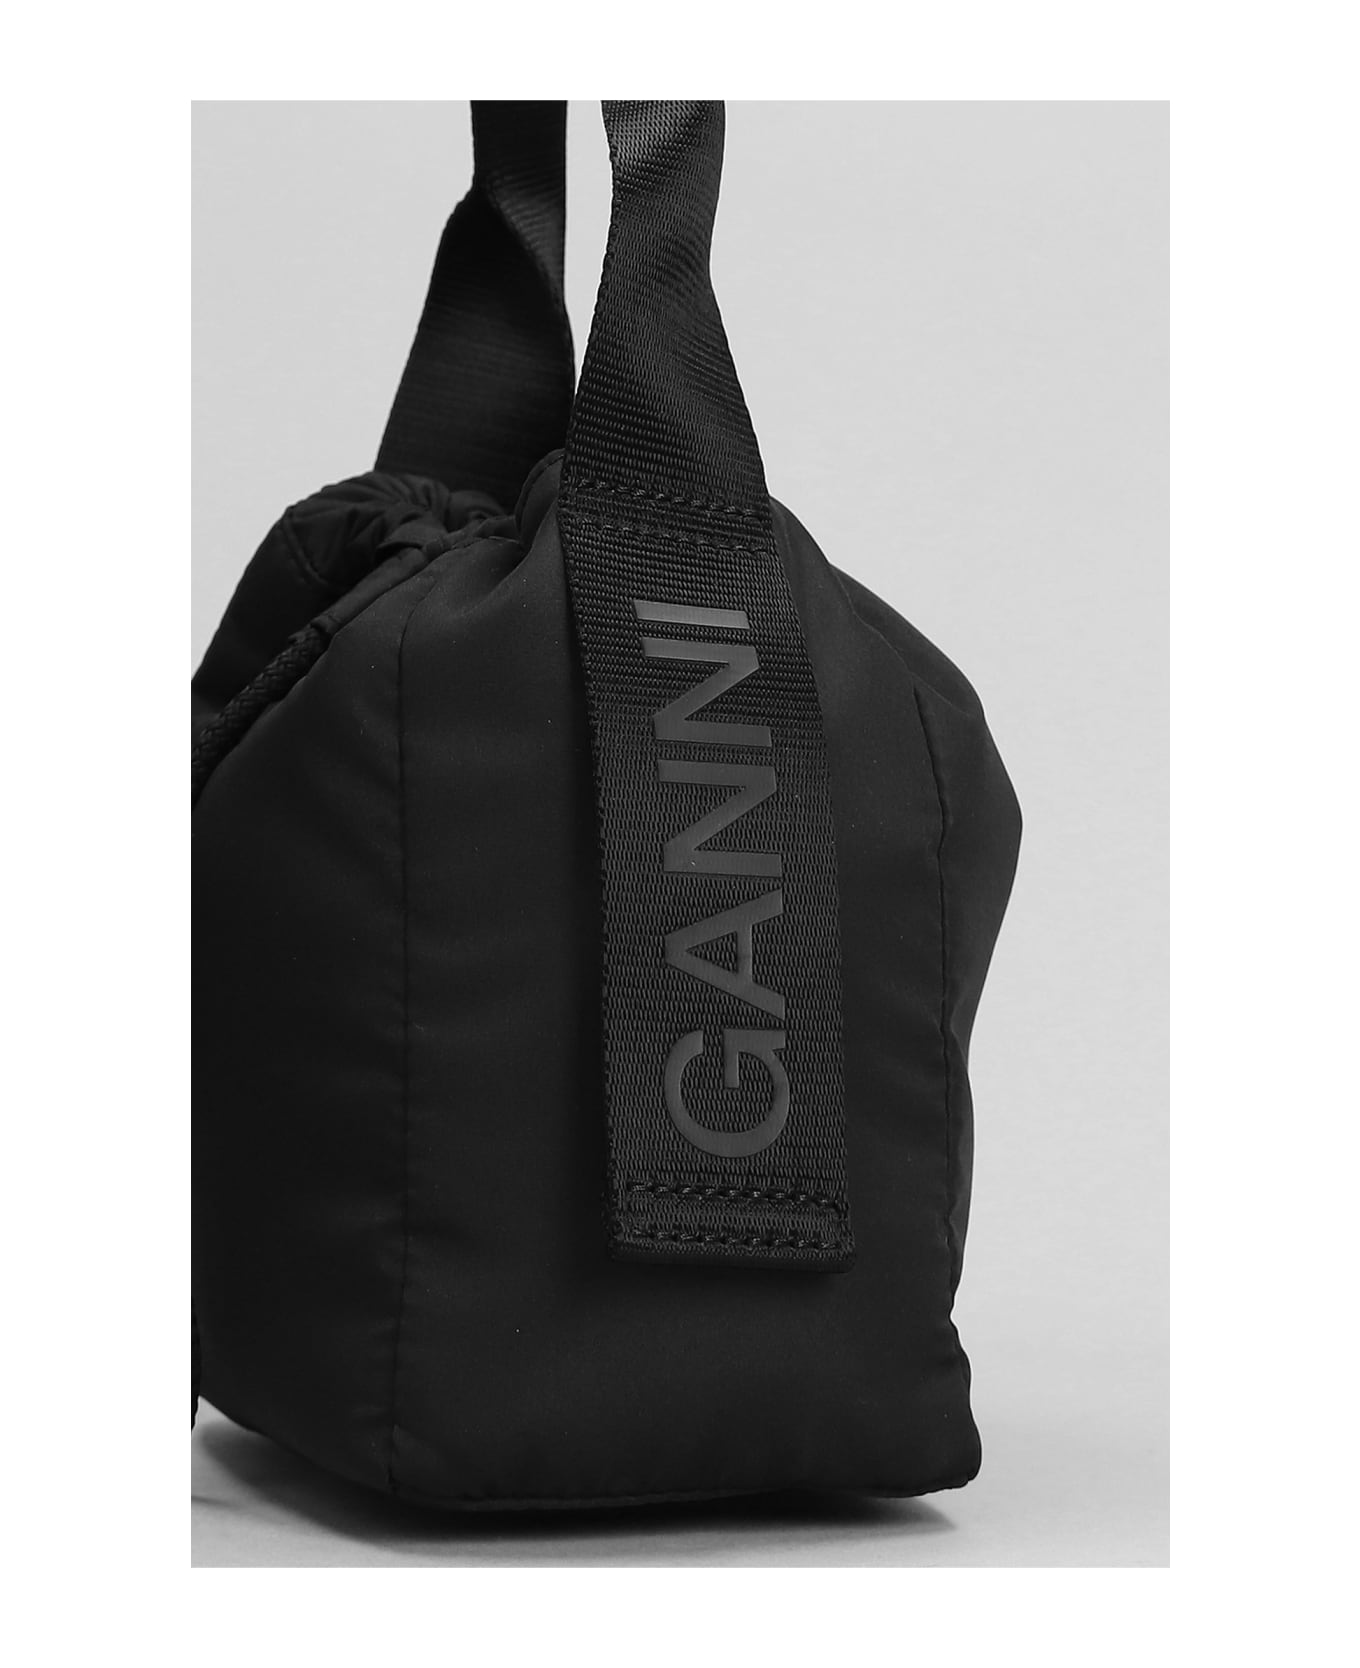 Ganni Recycled Tech Handbag - Black